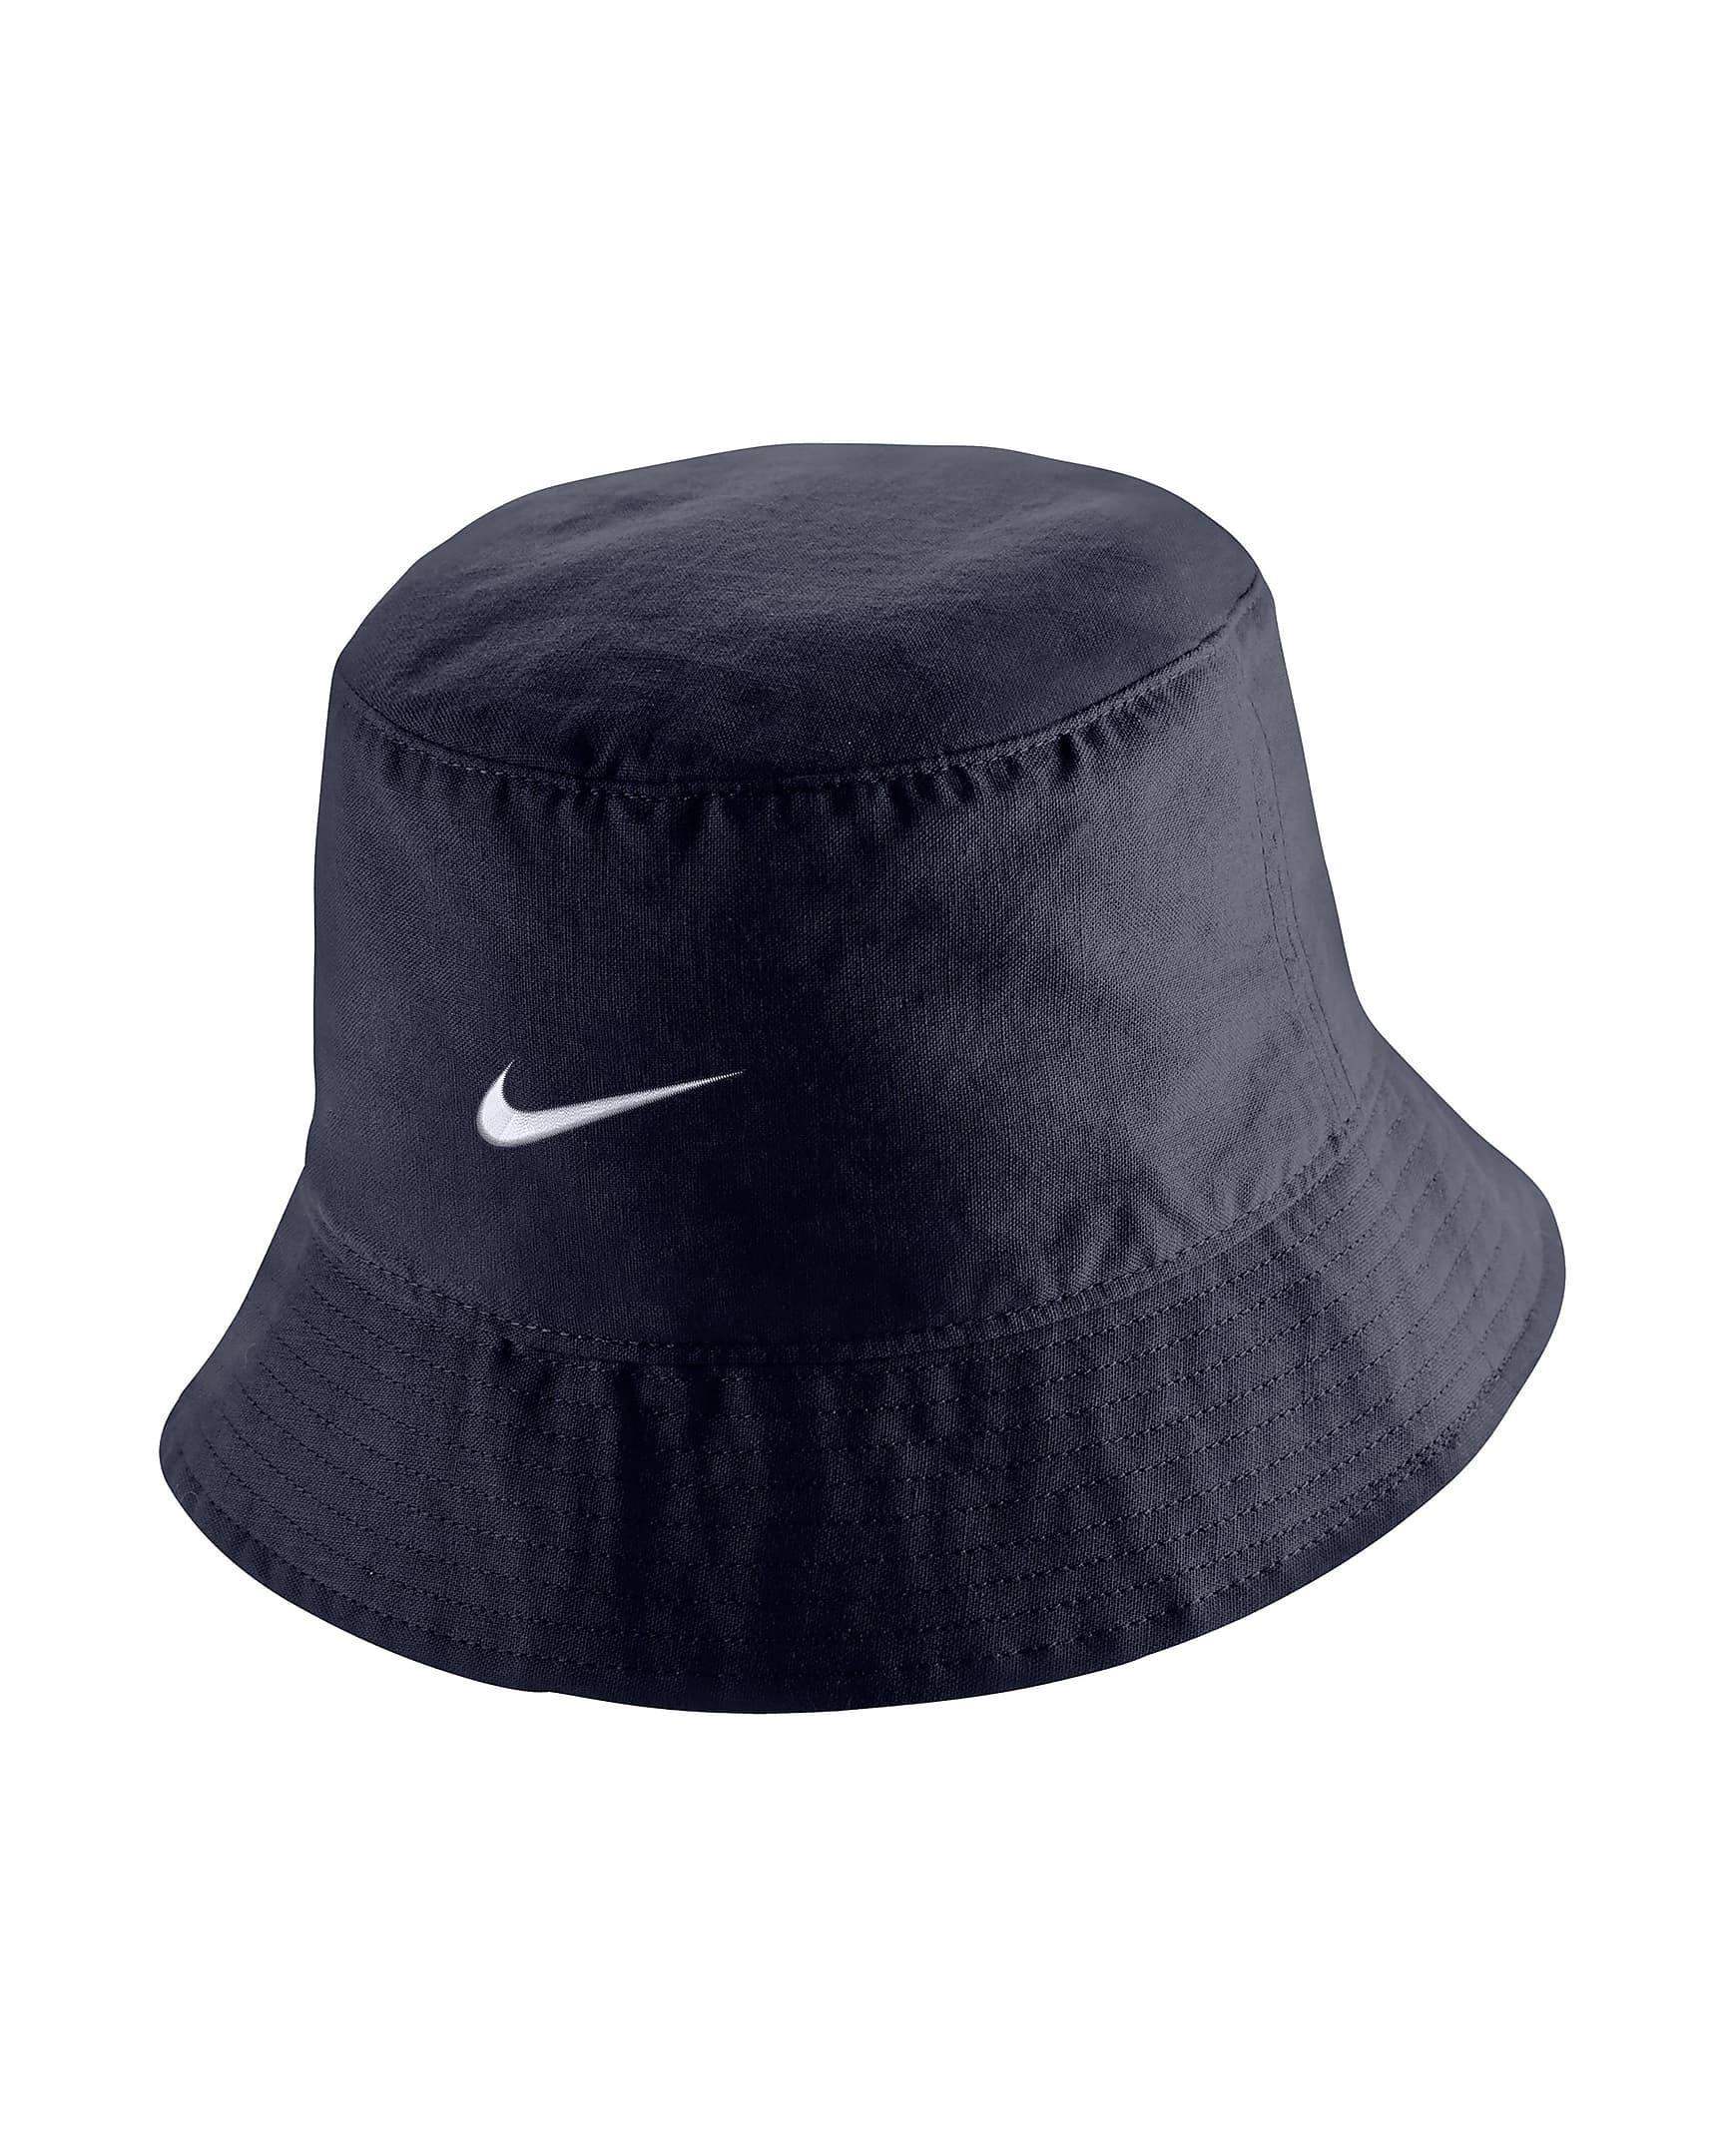 FFF Men's Bucket Hat. Nike.com